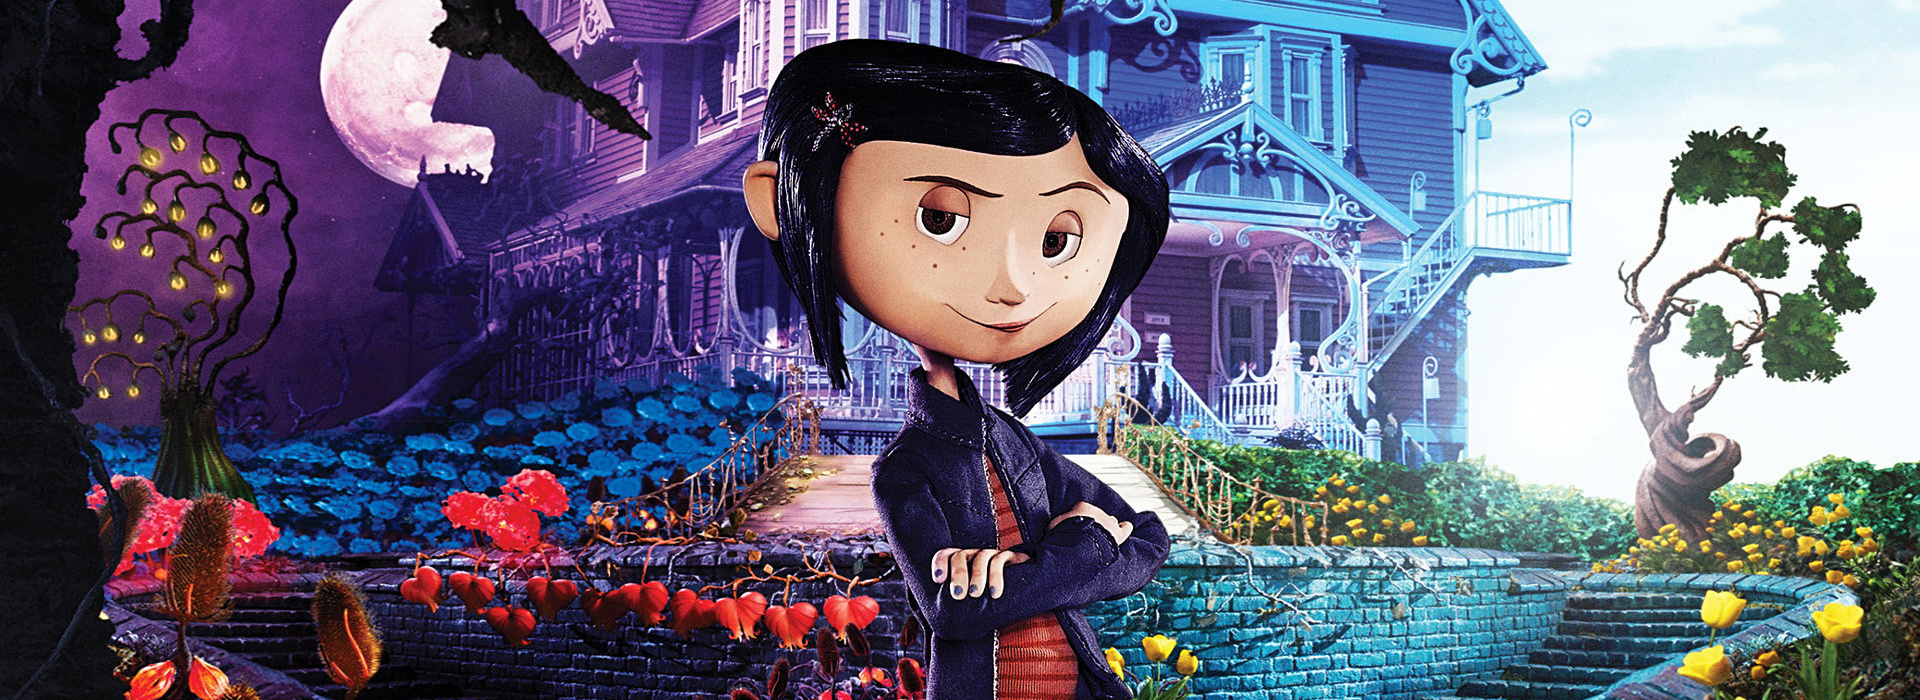 Movie poster Coraline